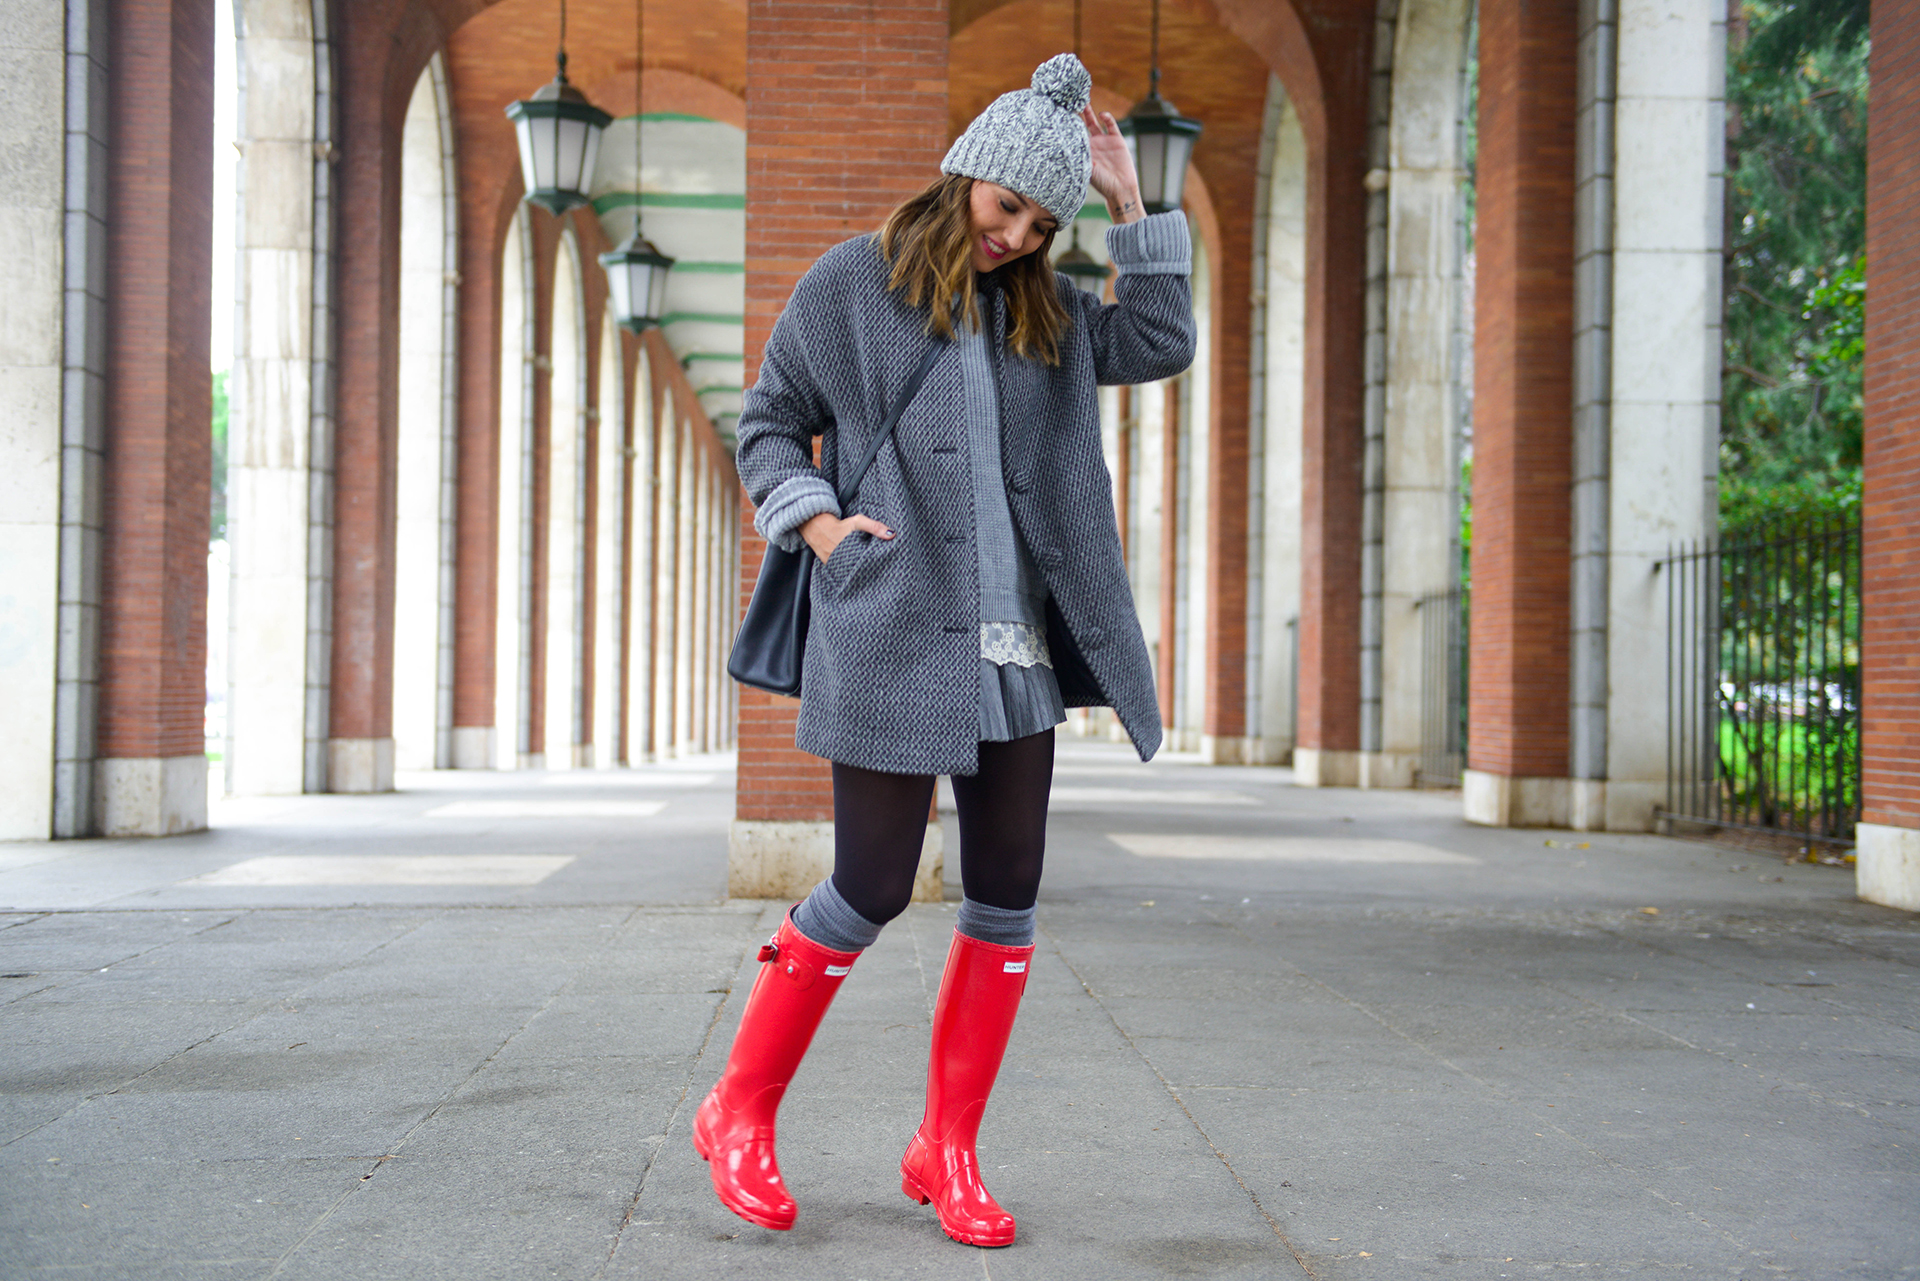 16 Cute Ways To Wear Rain Boots